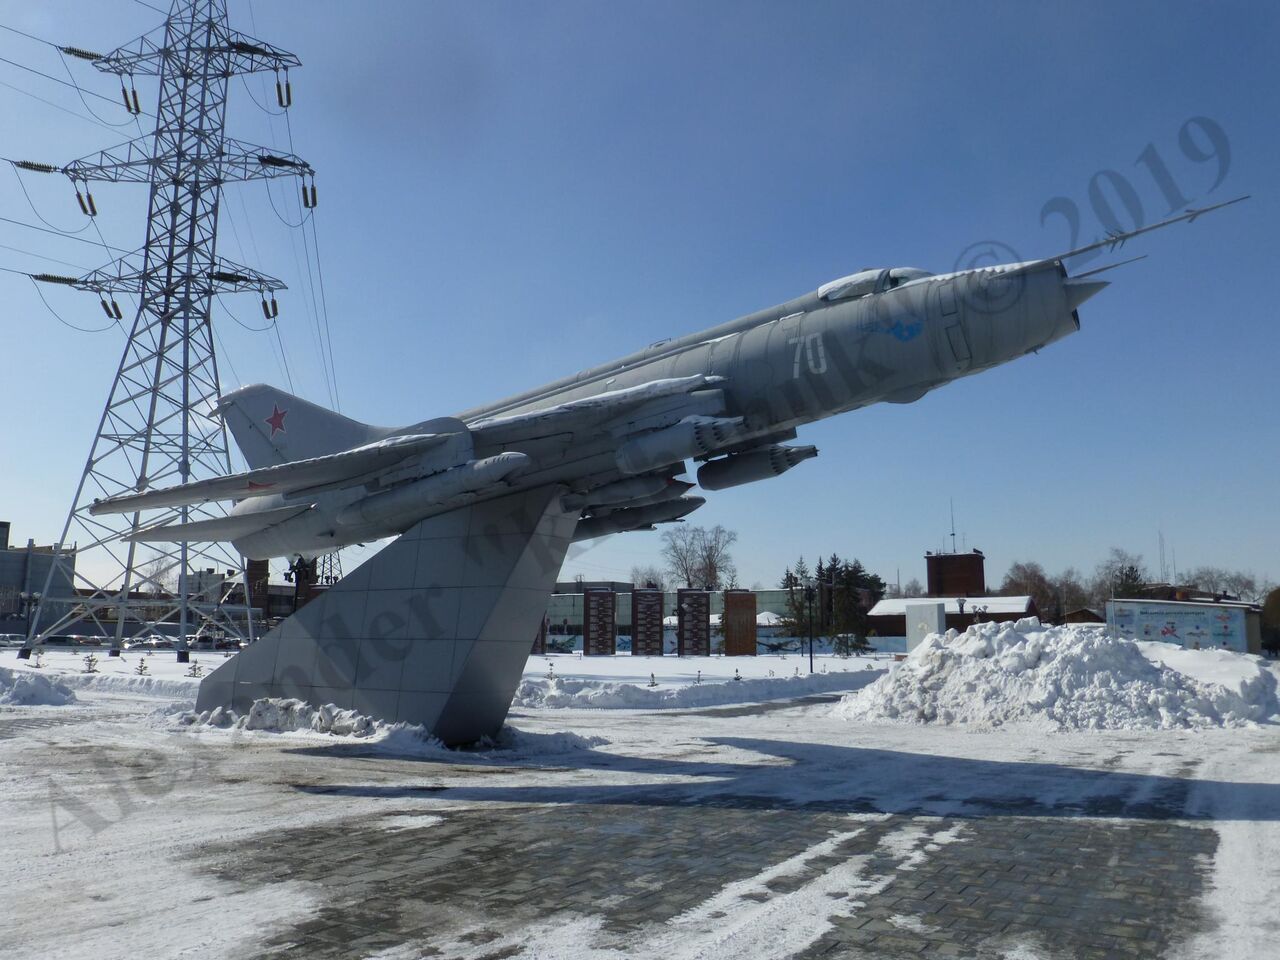 Su-17_2.jpg